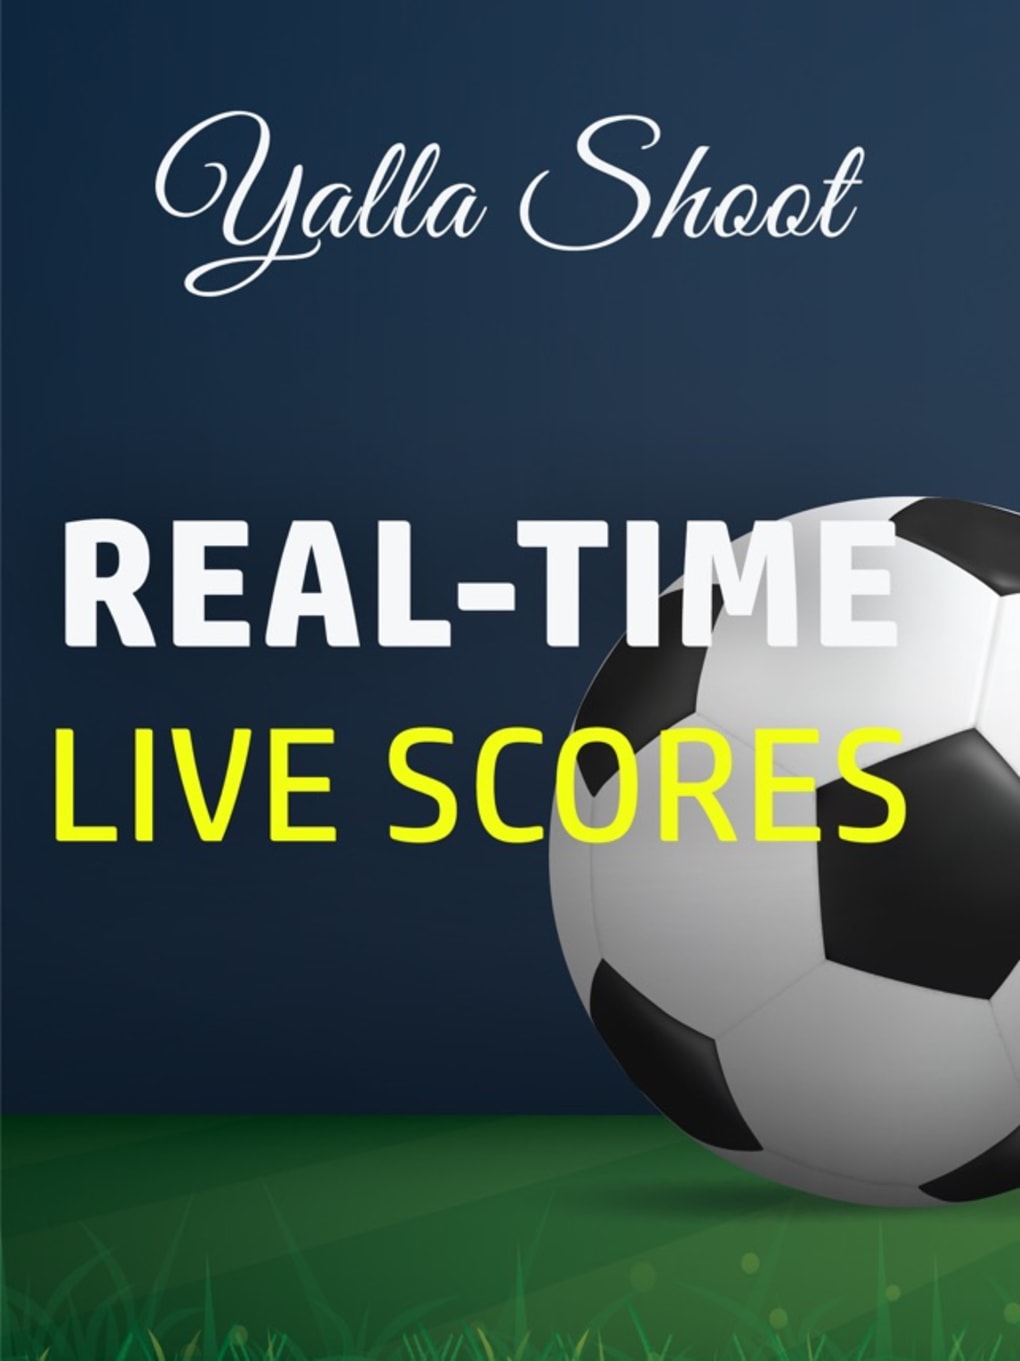 yalla goal football live